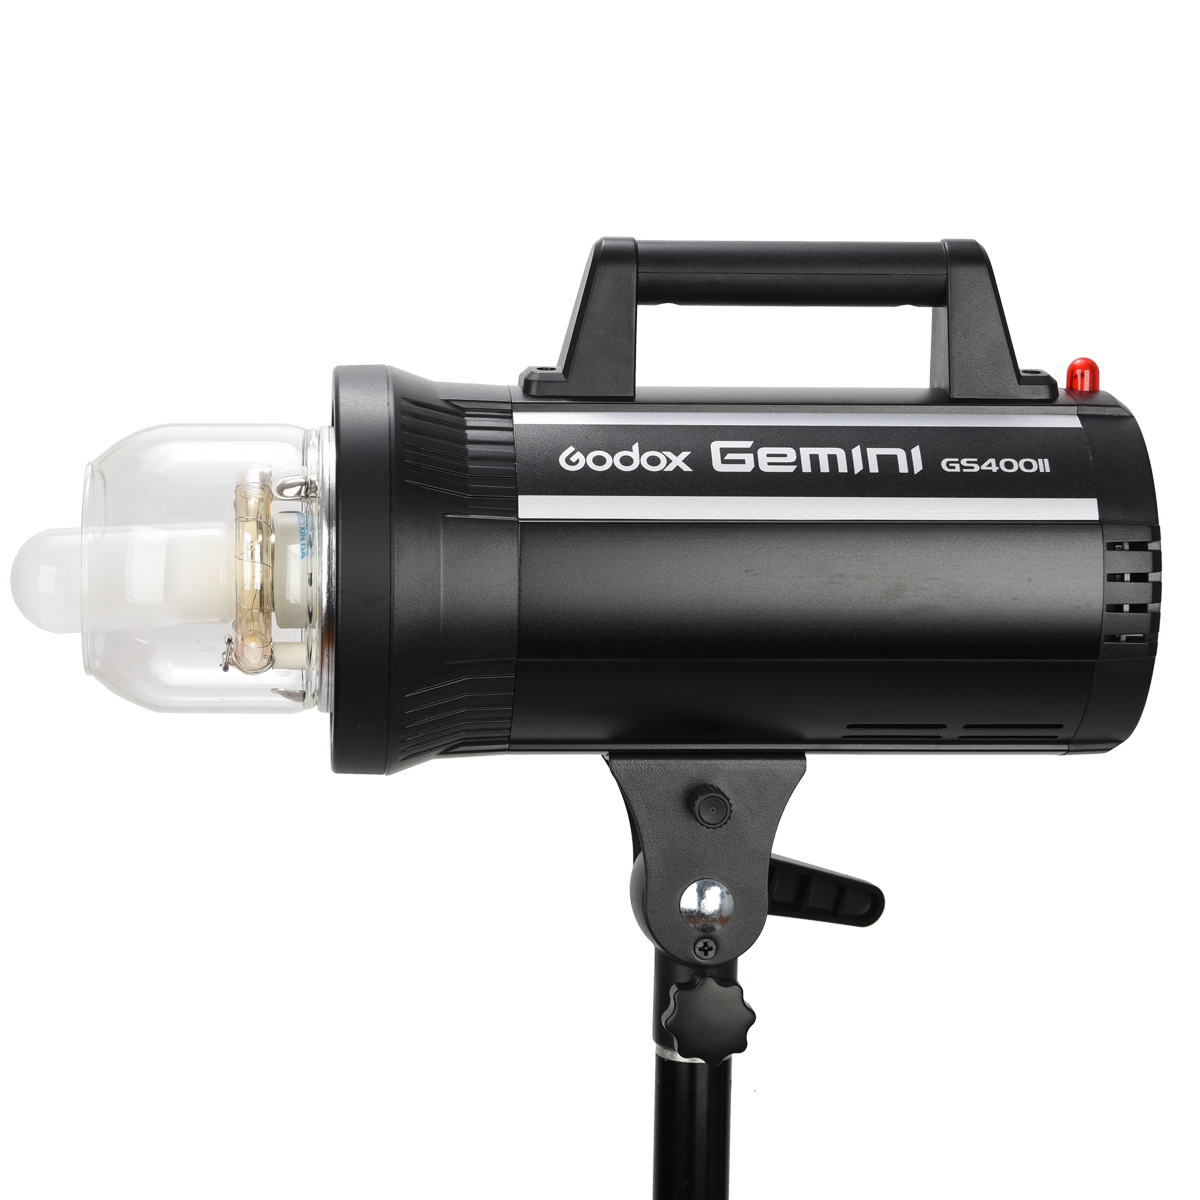    Godox Gemini GS400II   Ultra-mart